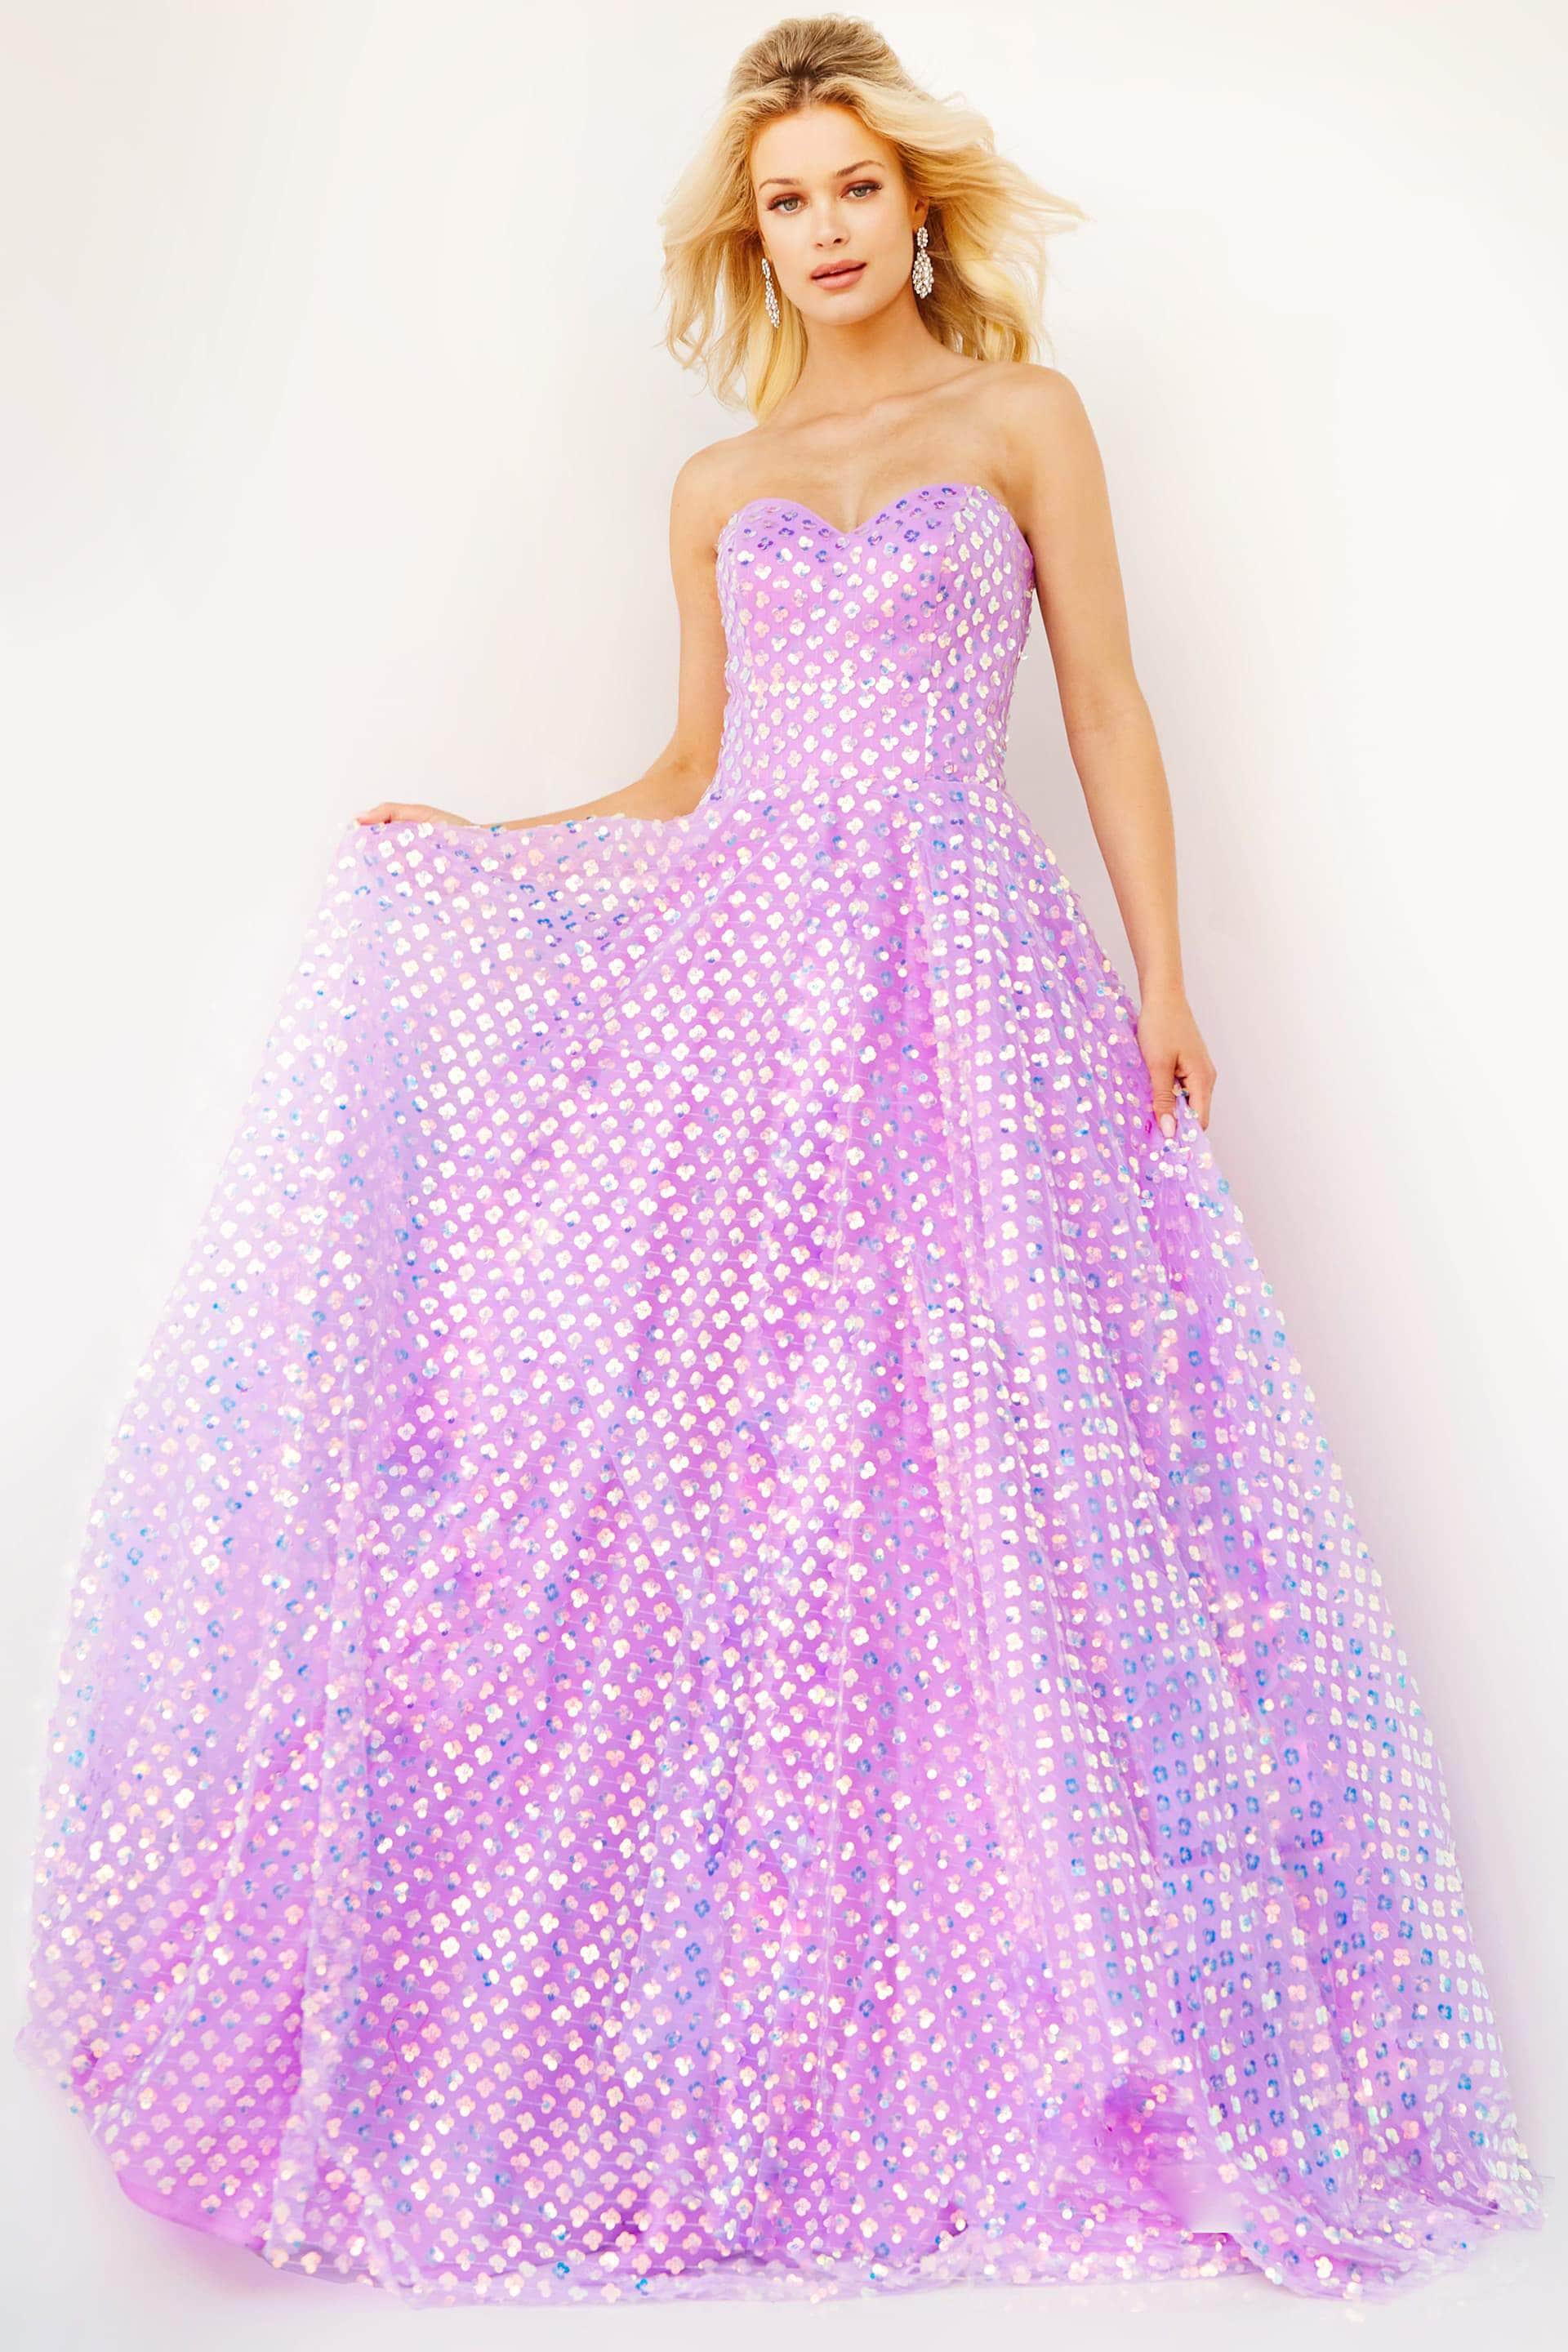 Image of Jovani 08605 - Clover Sequin A-Line Prom Dress